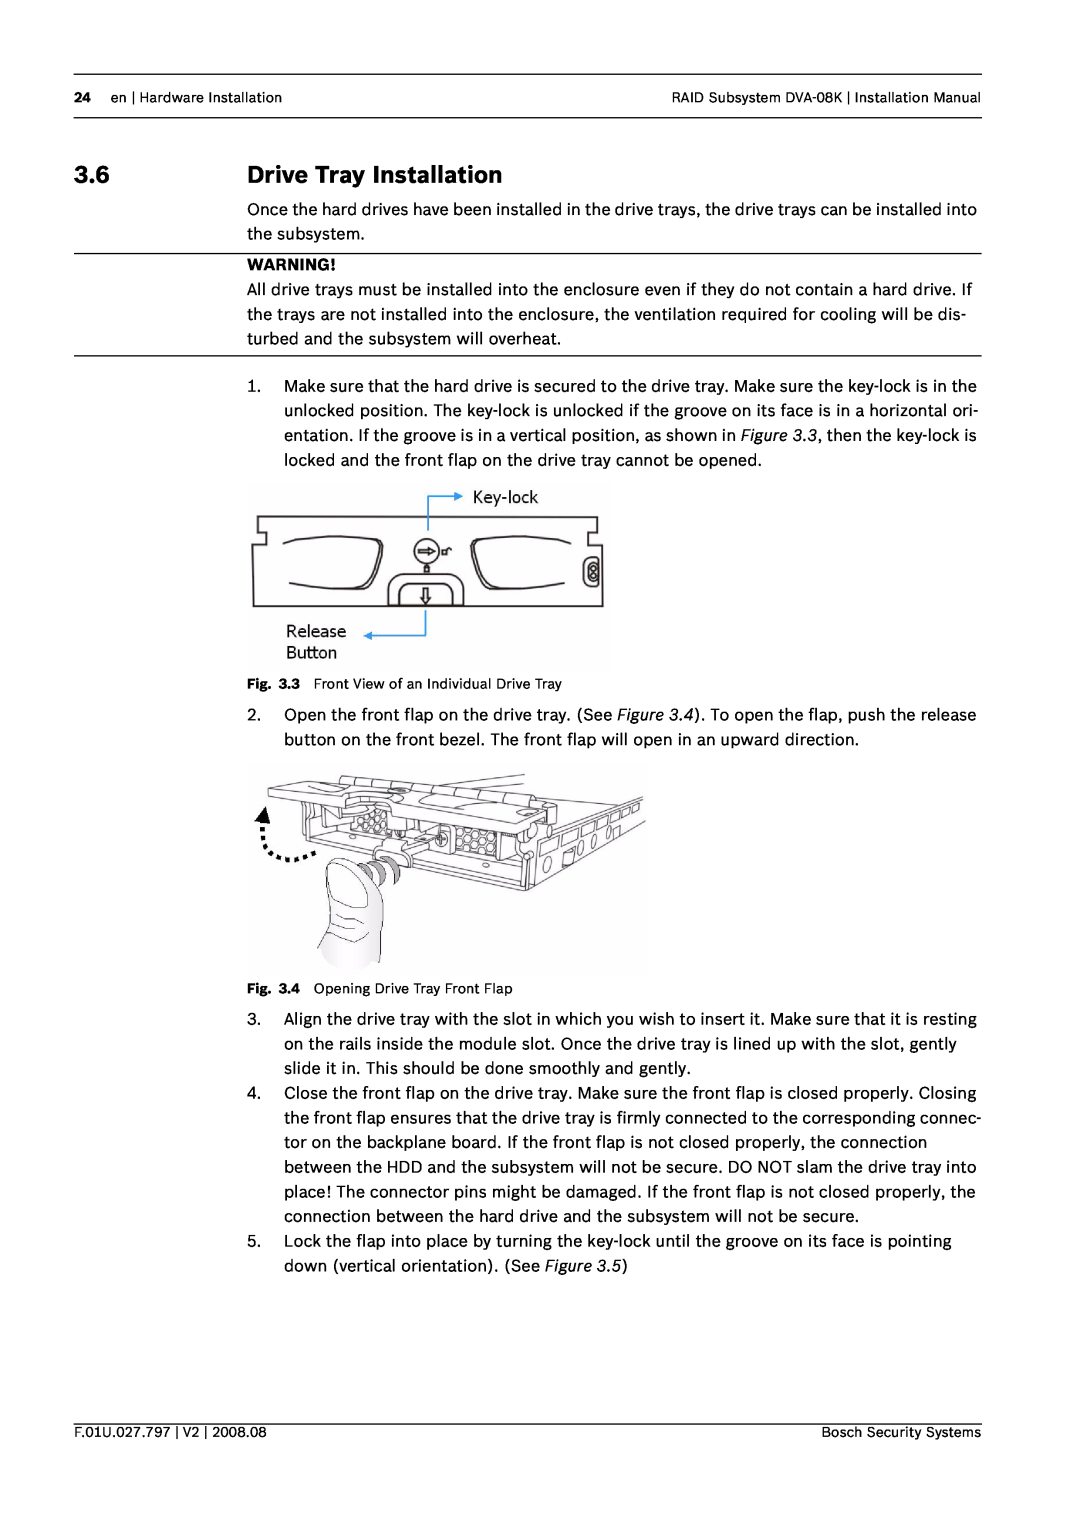 Bosch Appliances DVA-08K manual 3.6Drive Tray Installation 